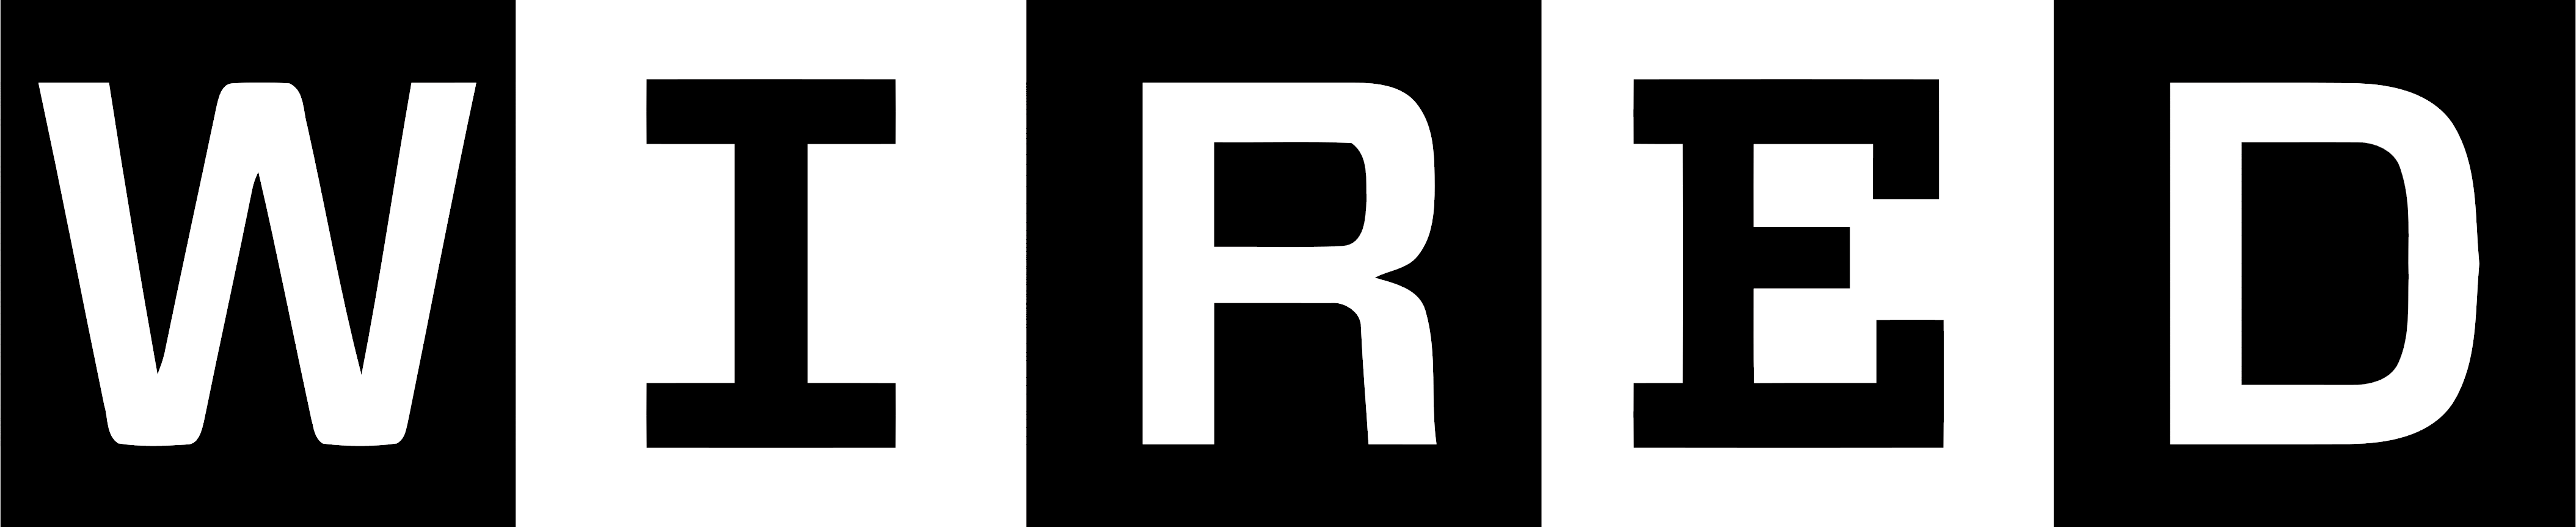 Wired logo, logotype